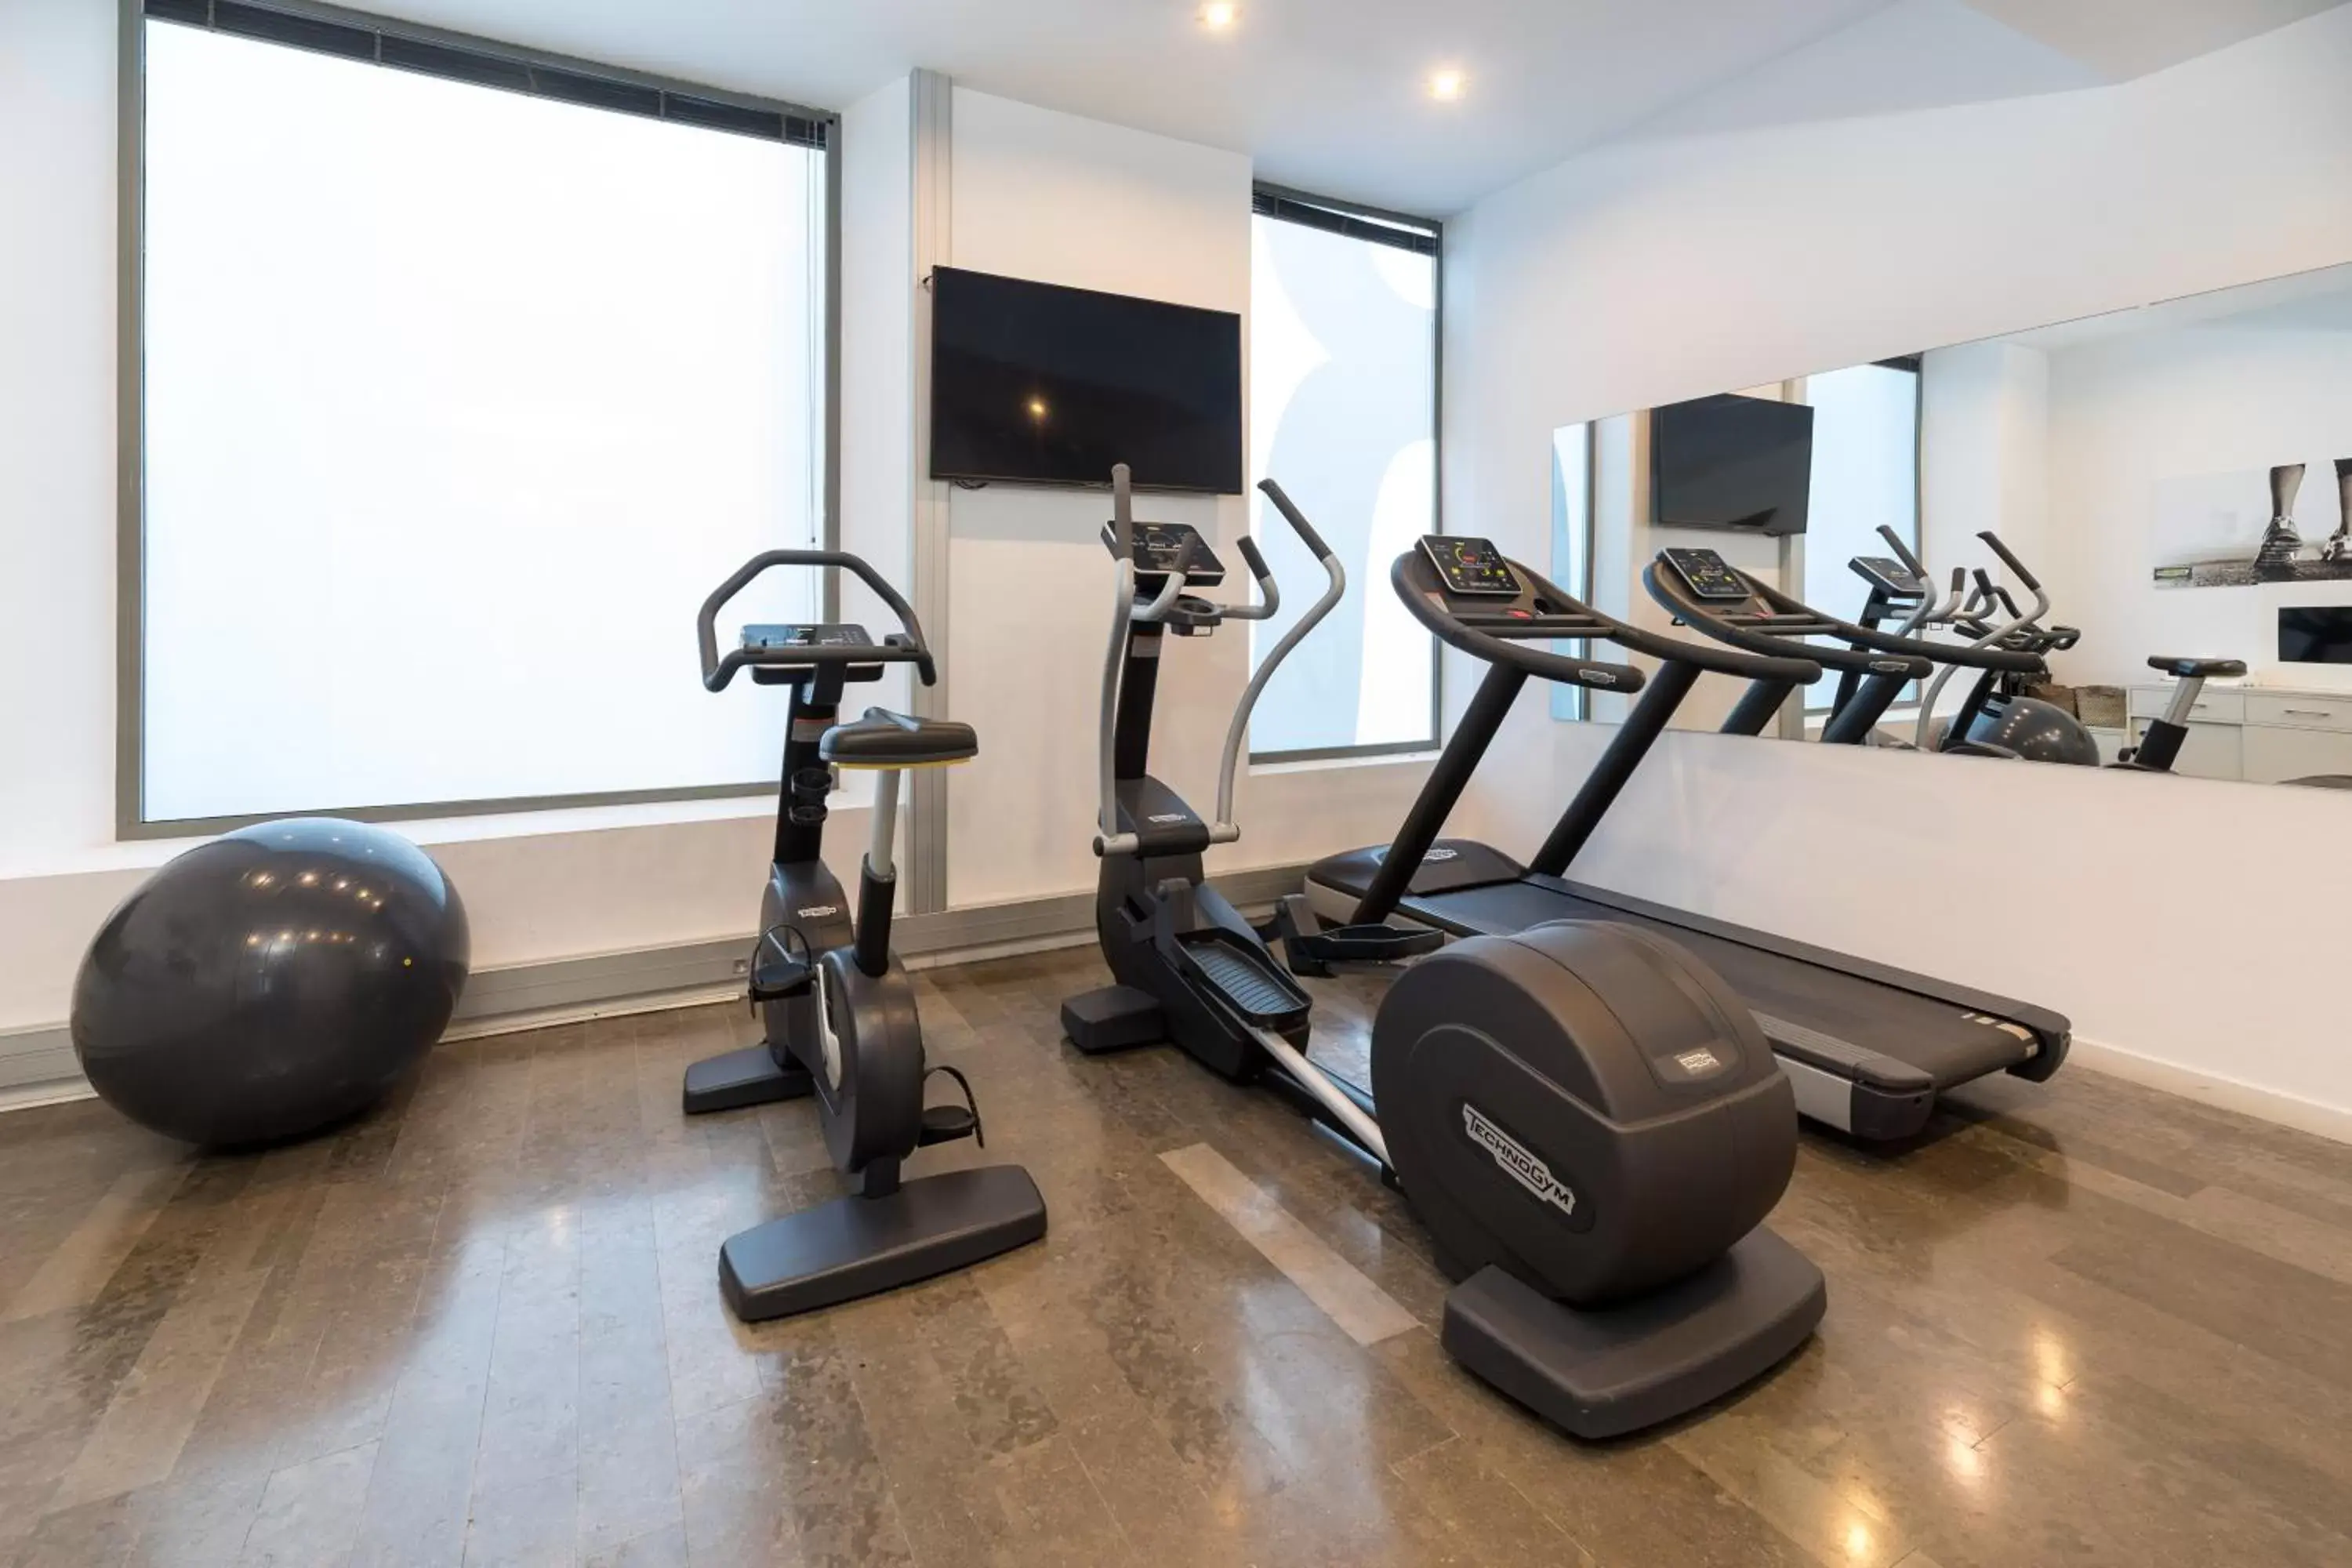 Fitness centre/facilities, Fitness Center/Facilities in Sercotel Amister Art Hotel Barcelona